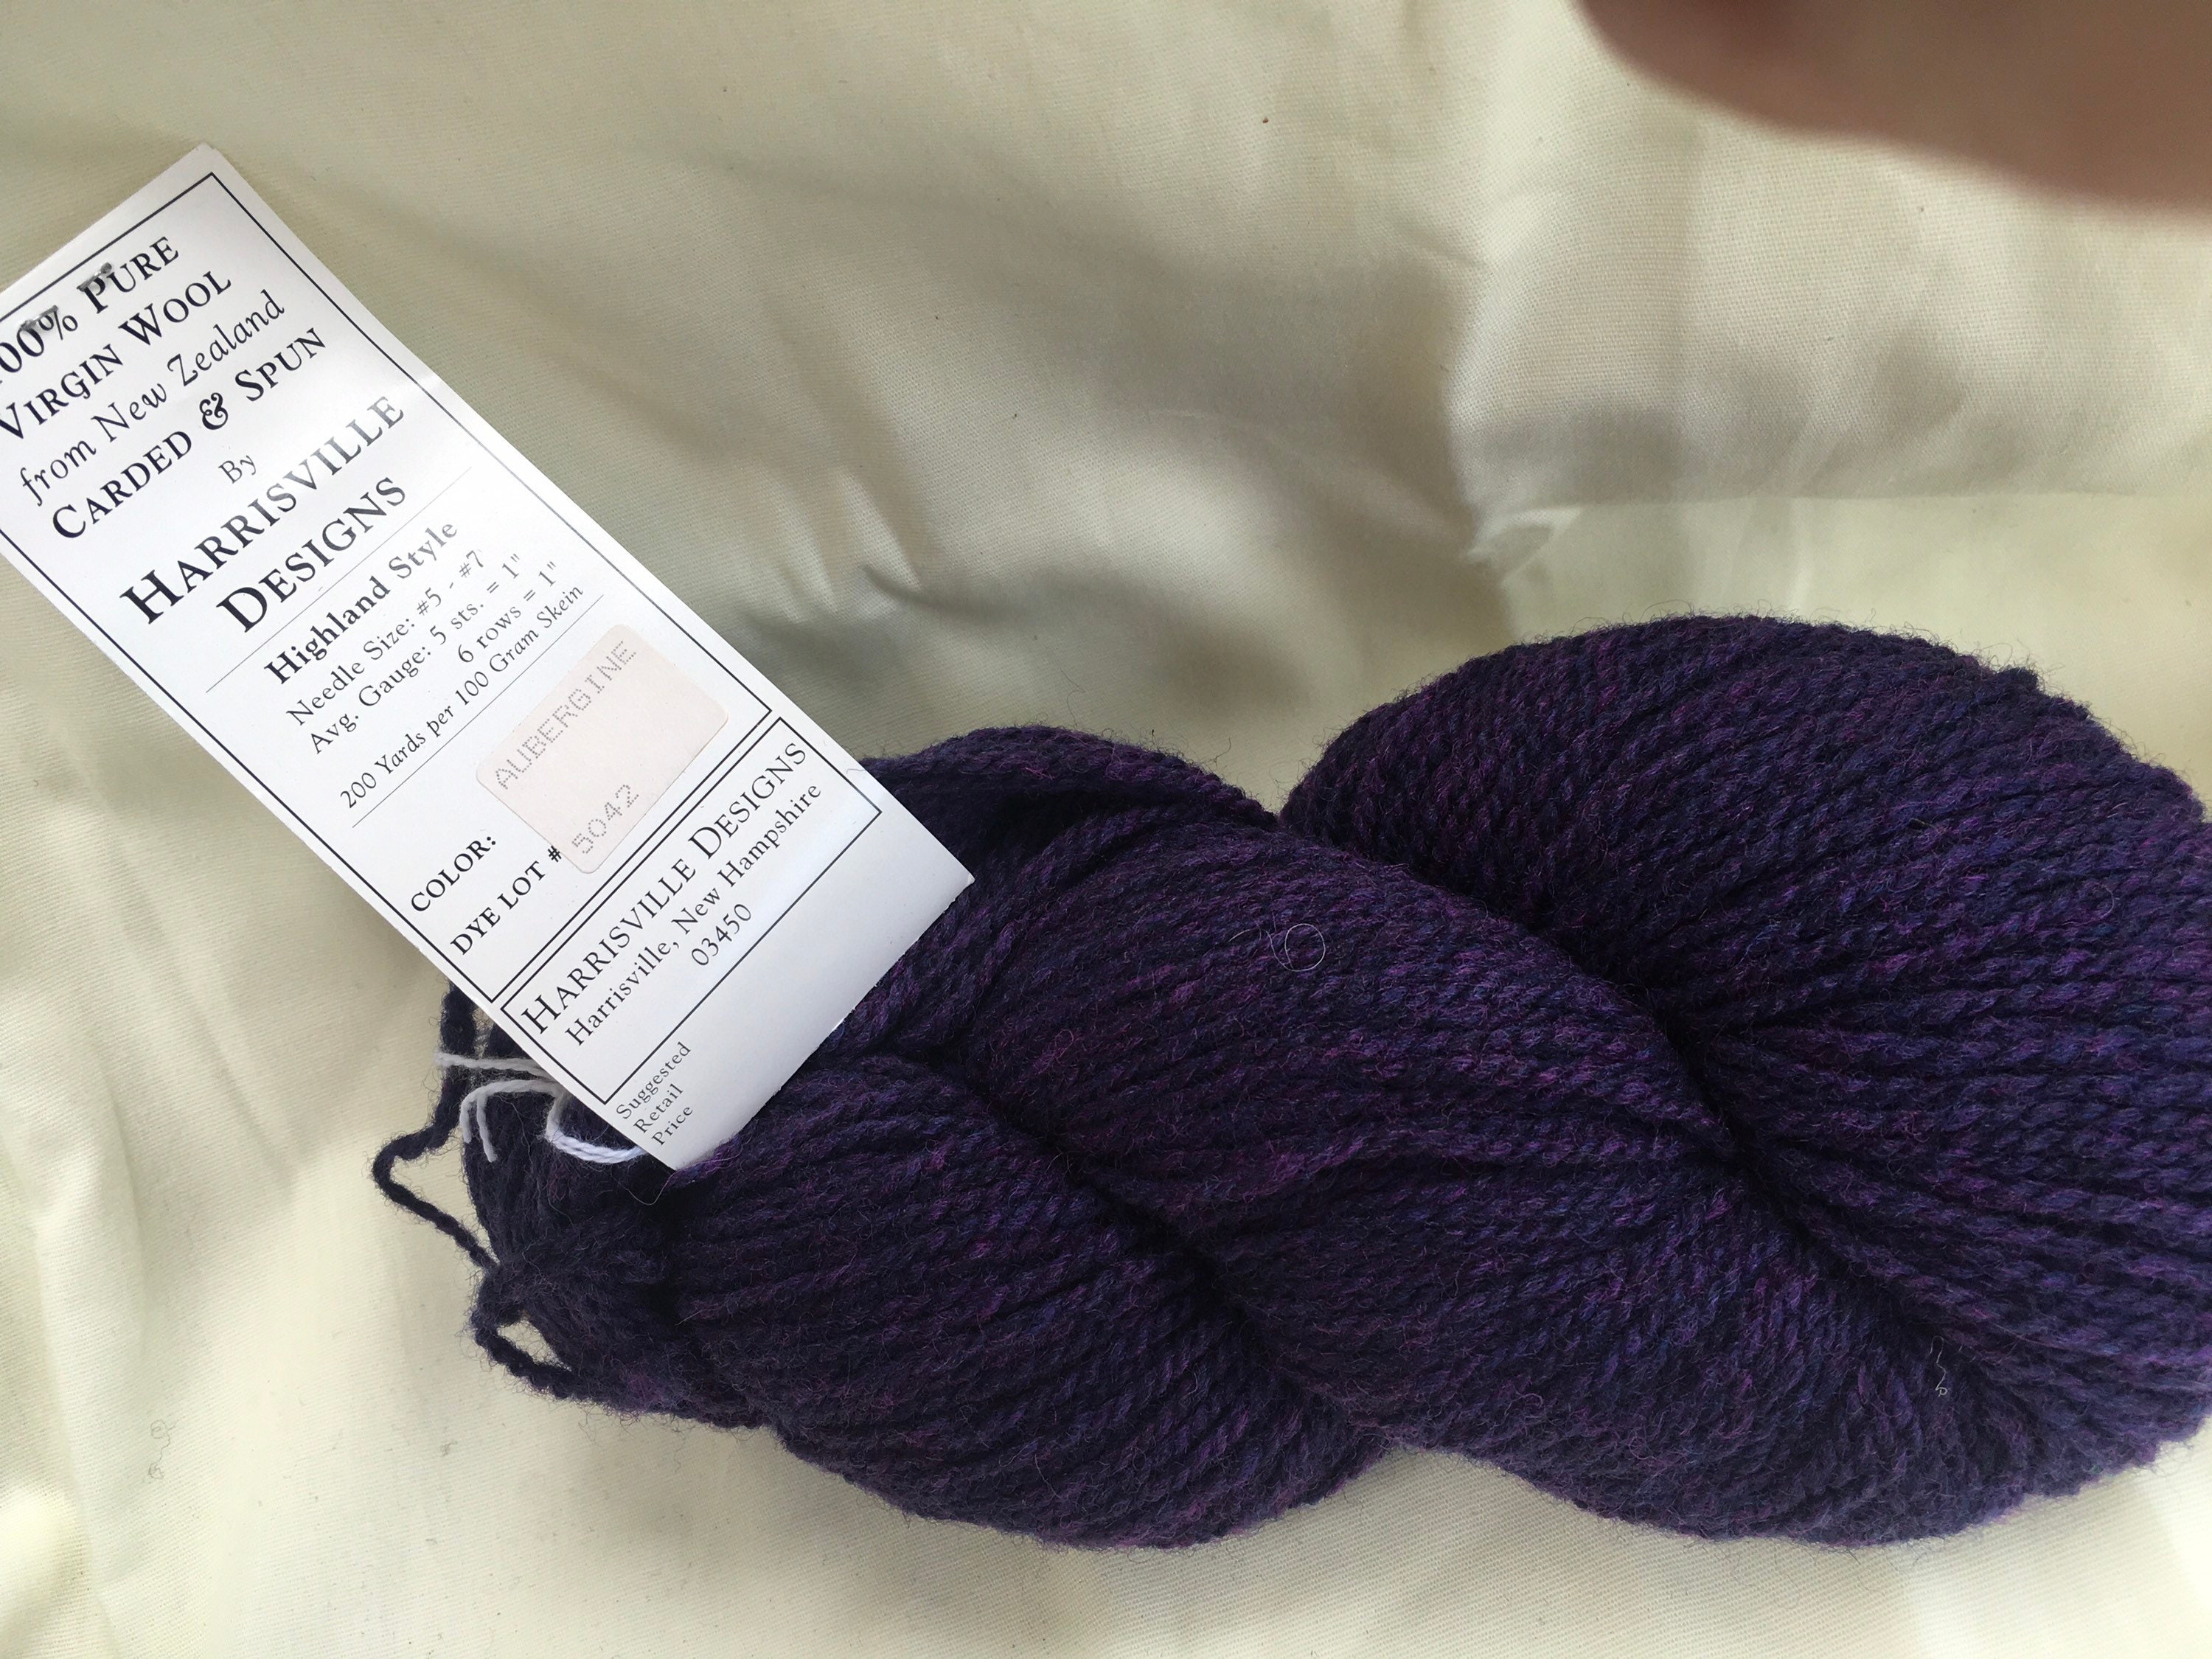 Highland Wool Yarn from Harrisville Designs